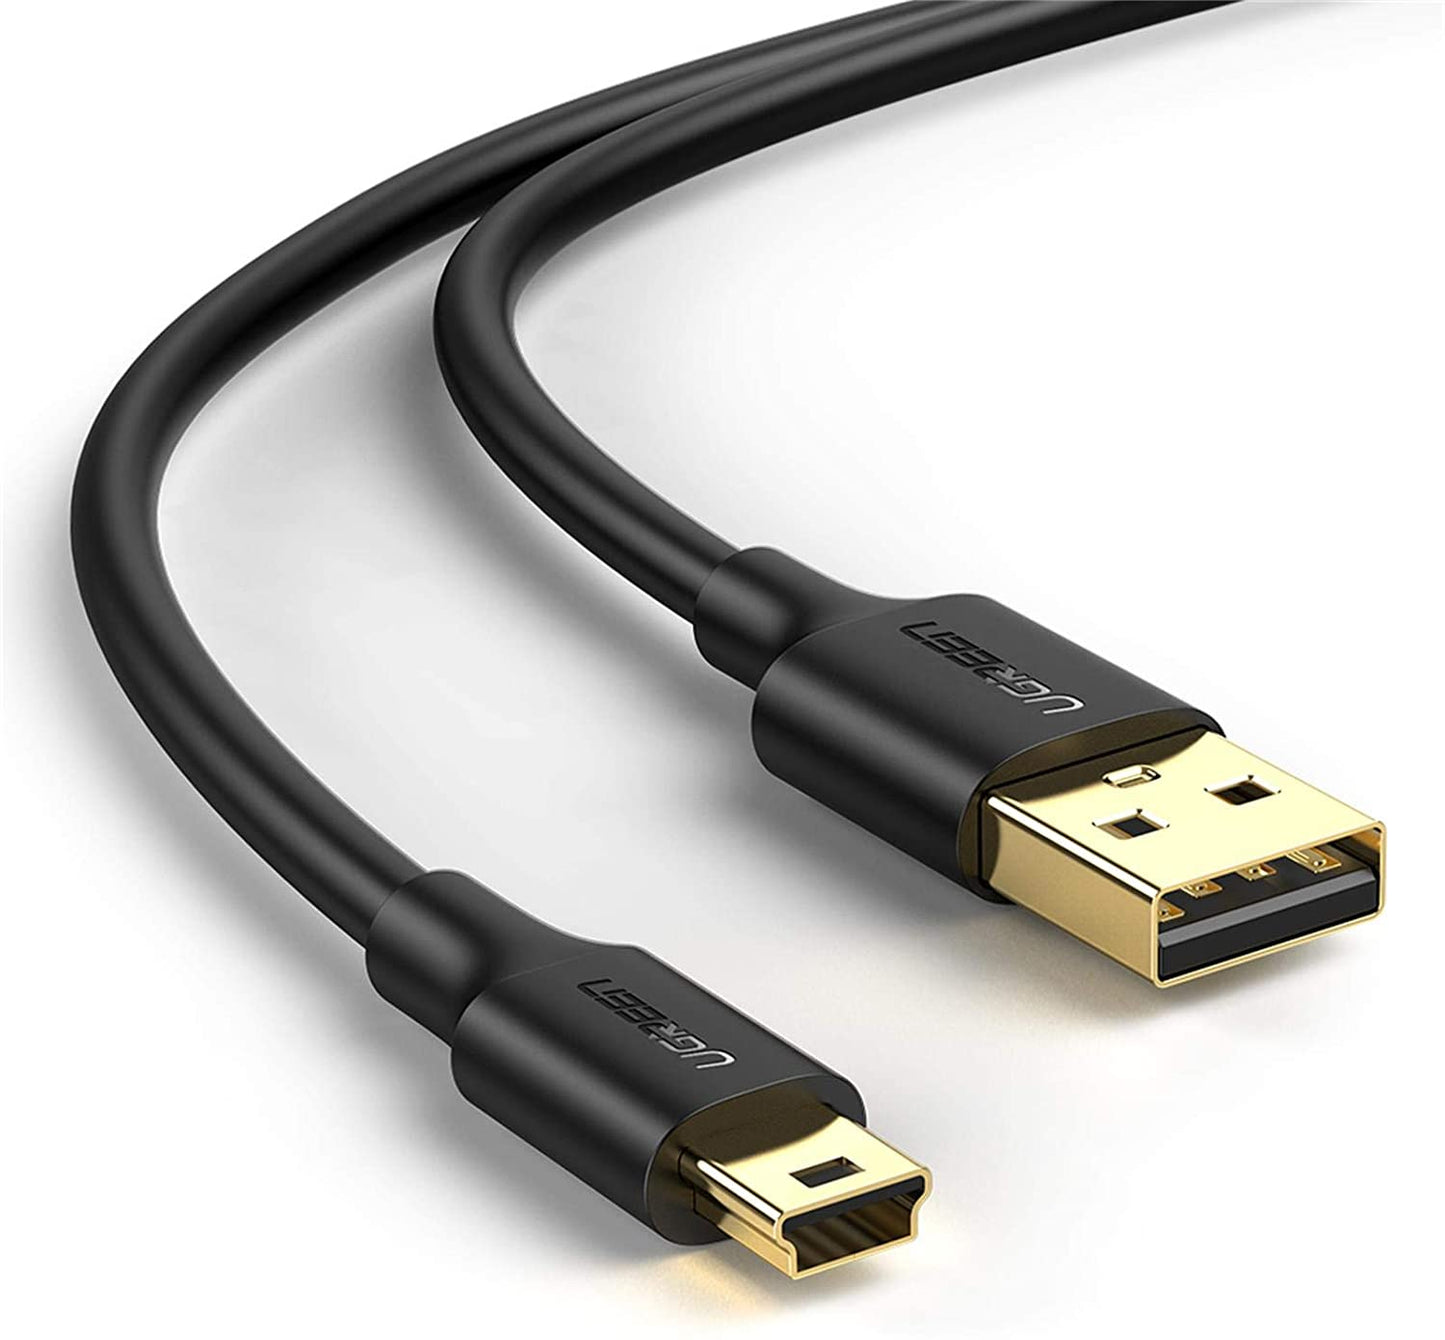 Mini USB Cable for e-readers